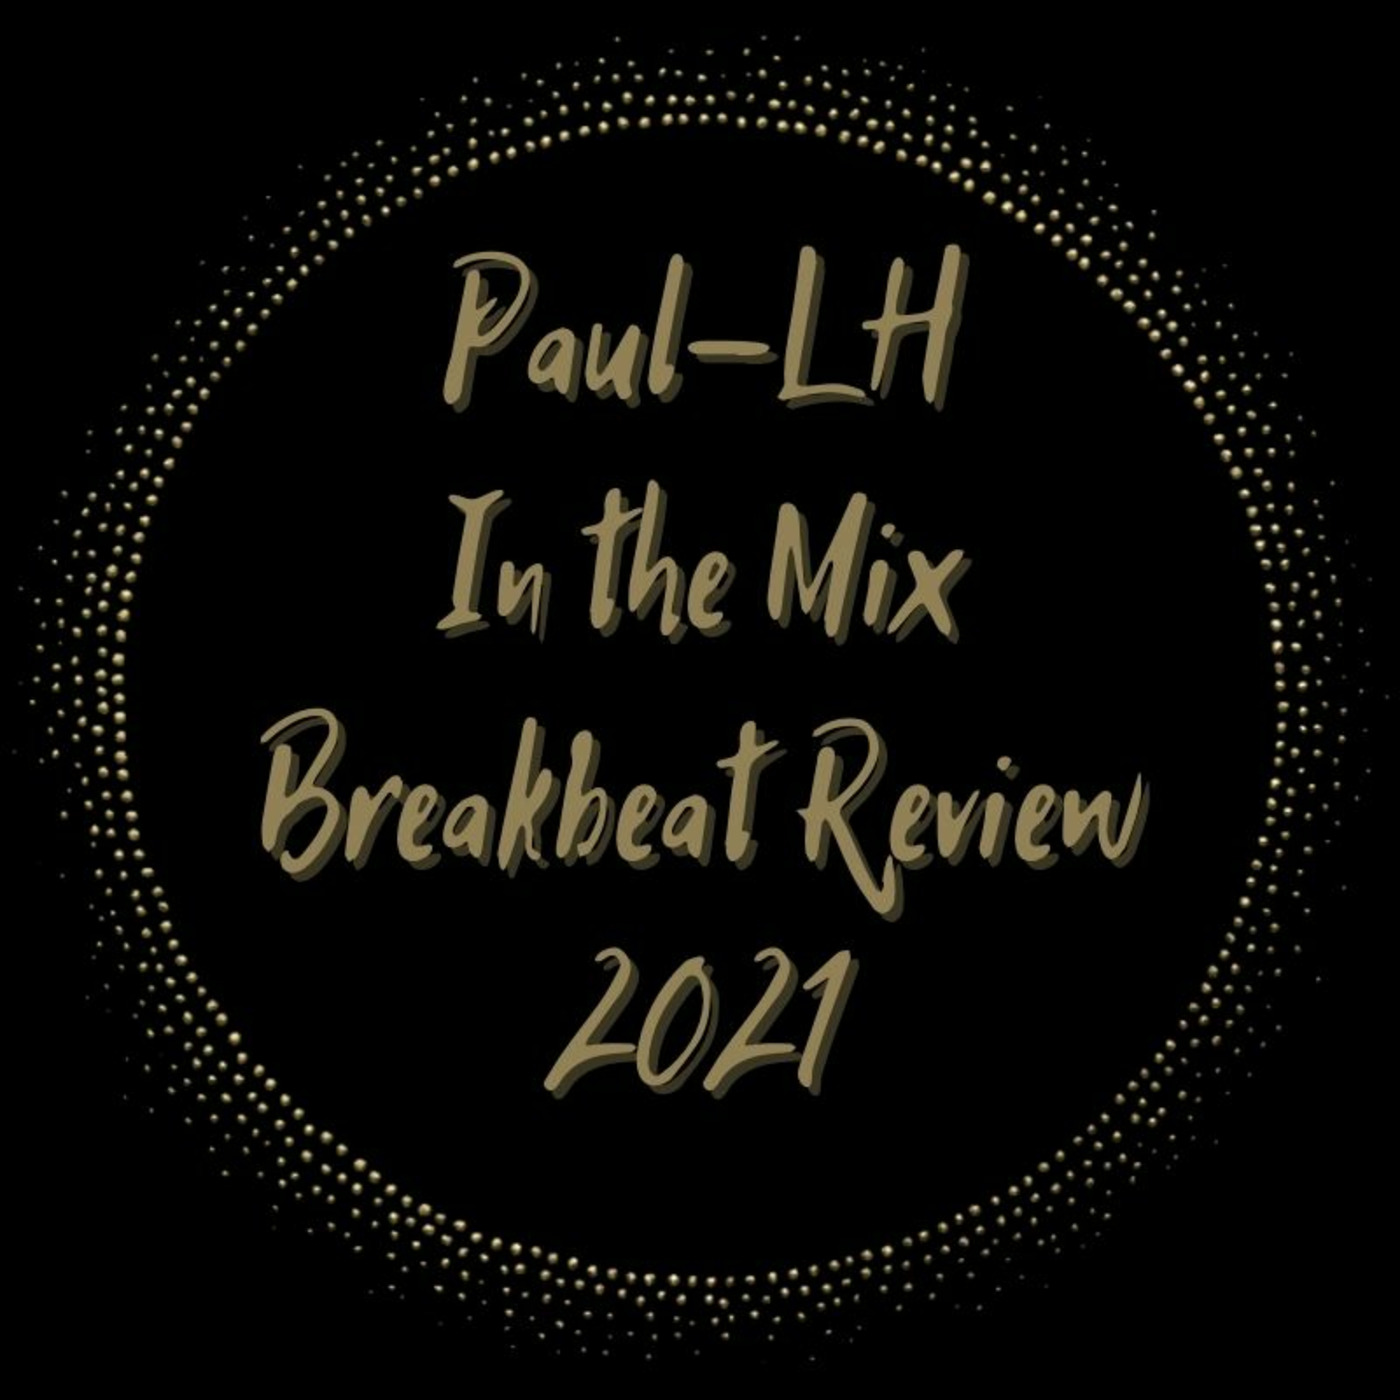 Breakbeat Review 2021